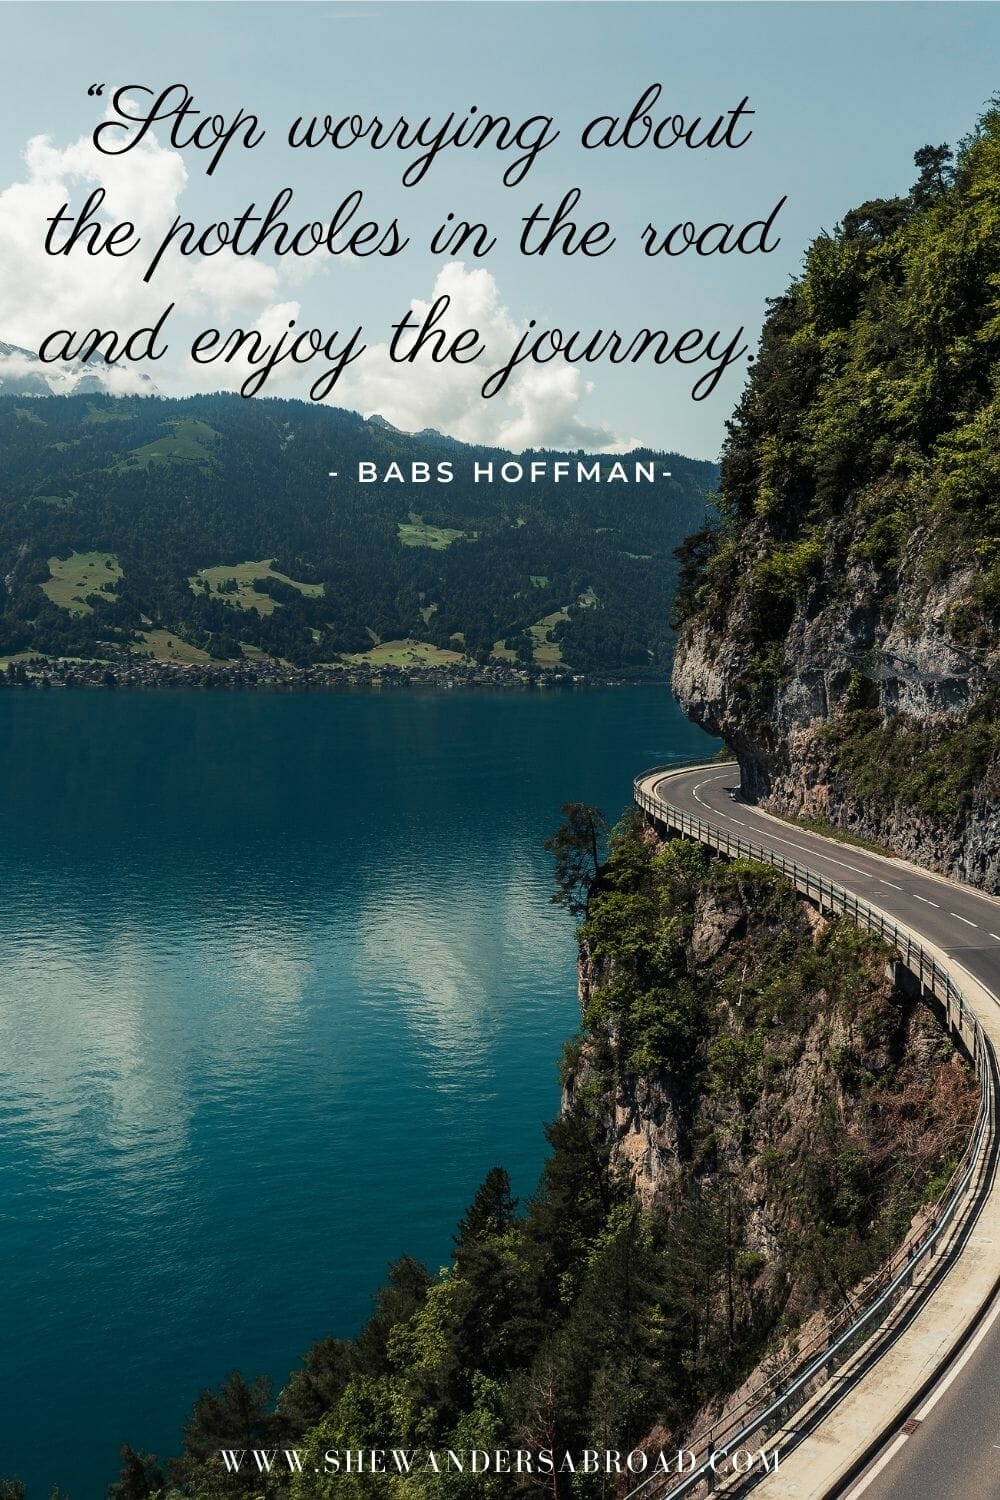 Best road trip quotes